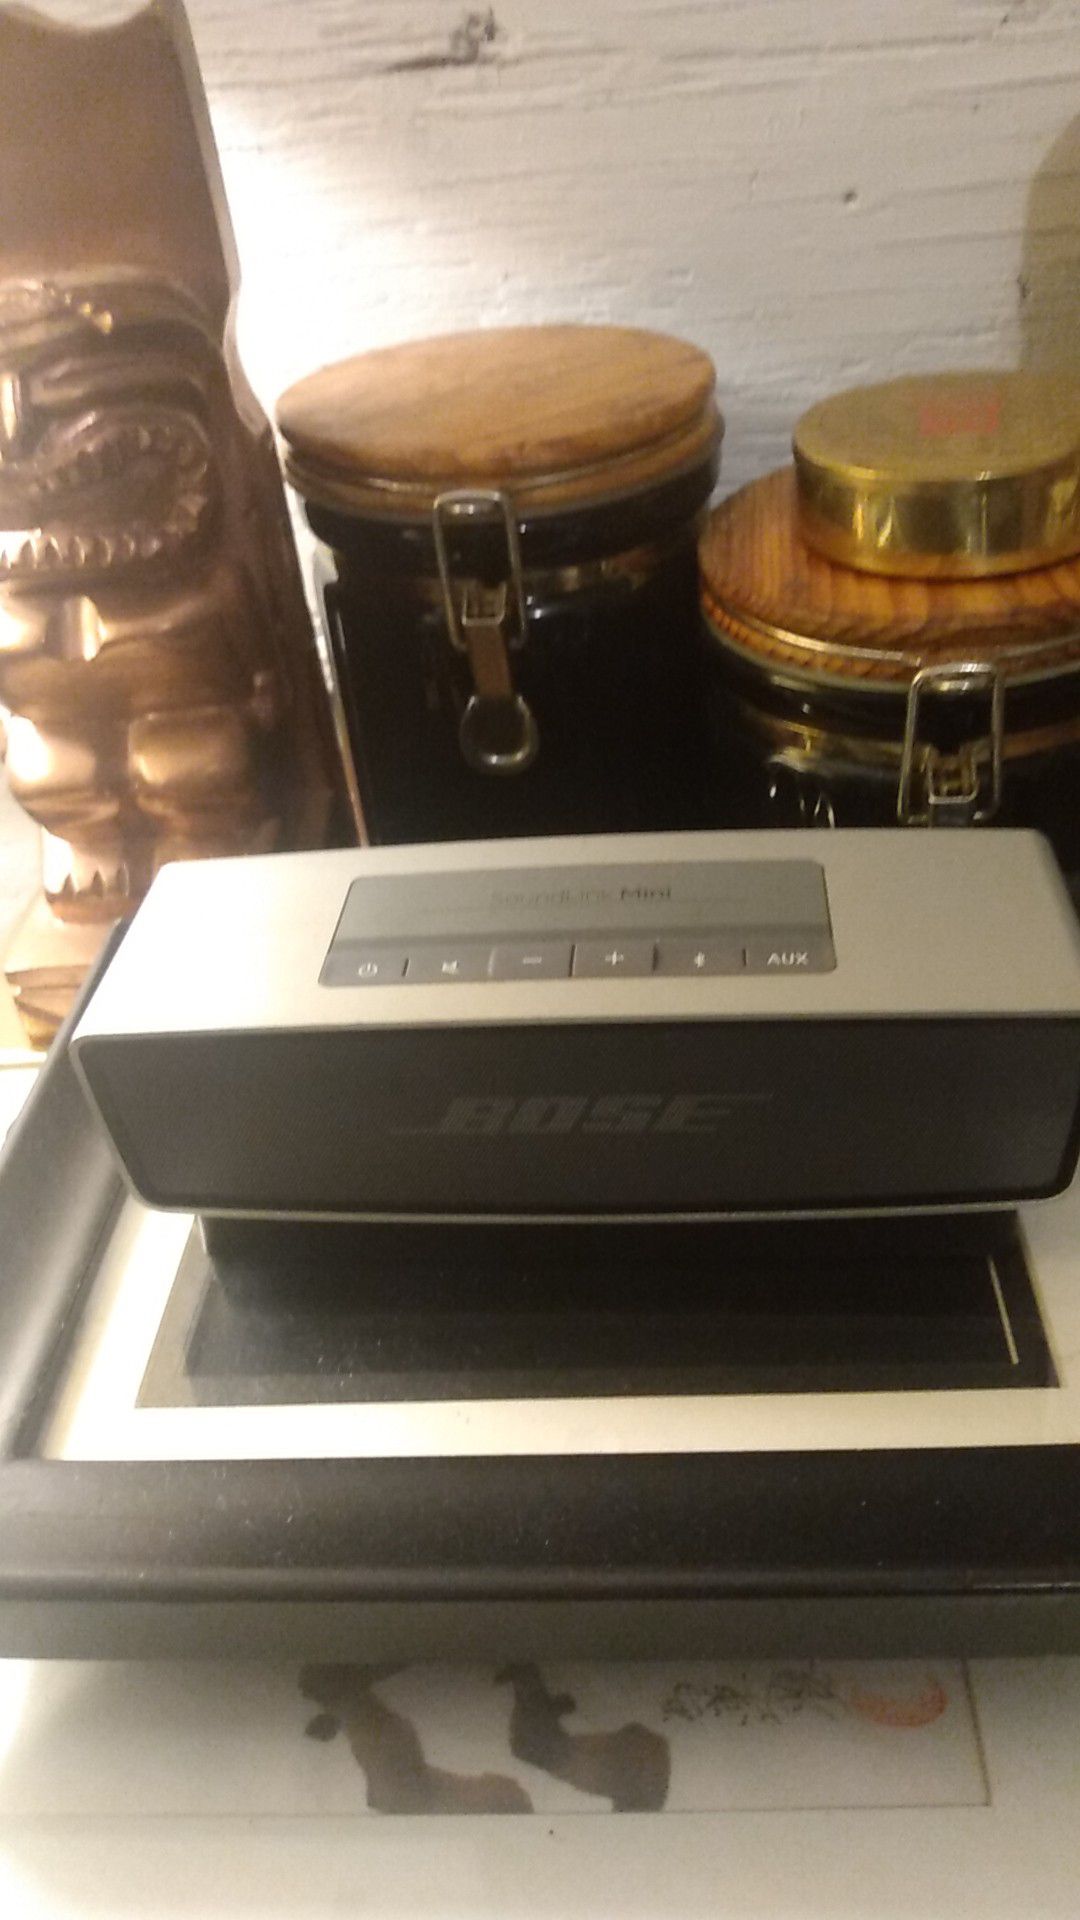 Bose soundlink mini and docking station charging pad,